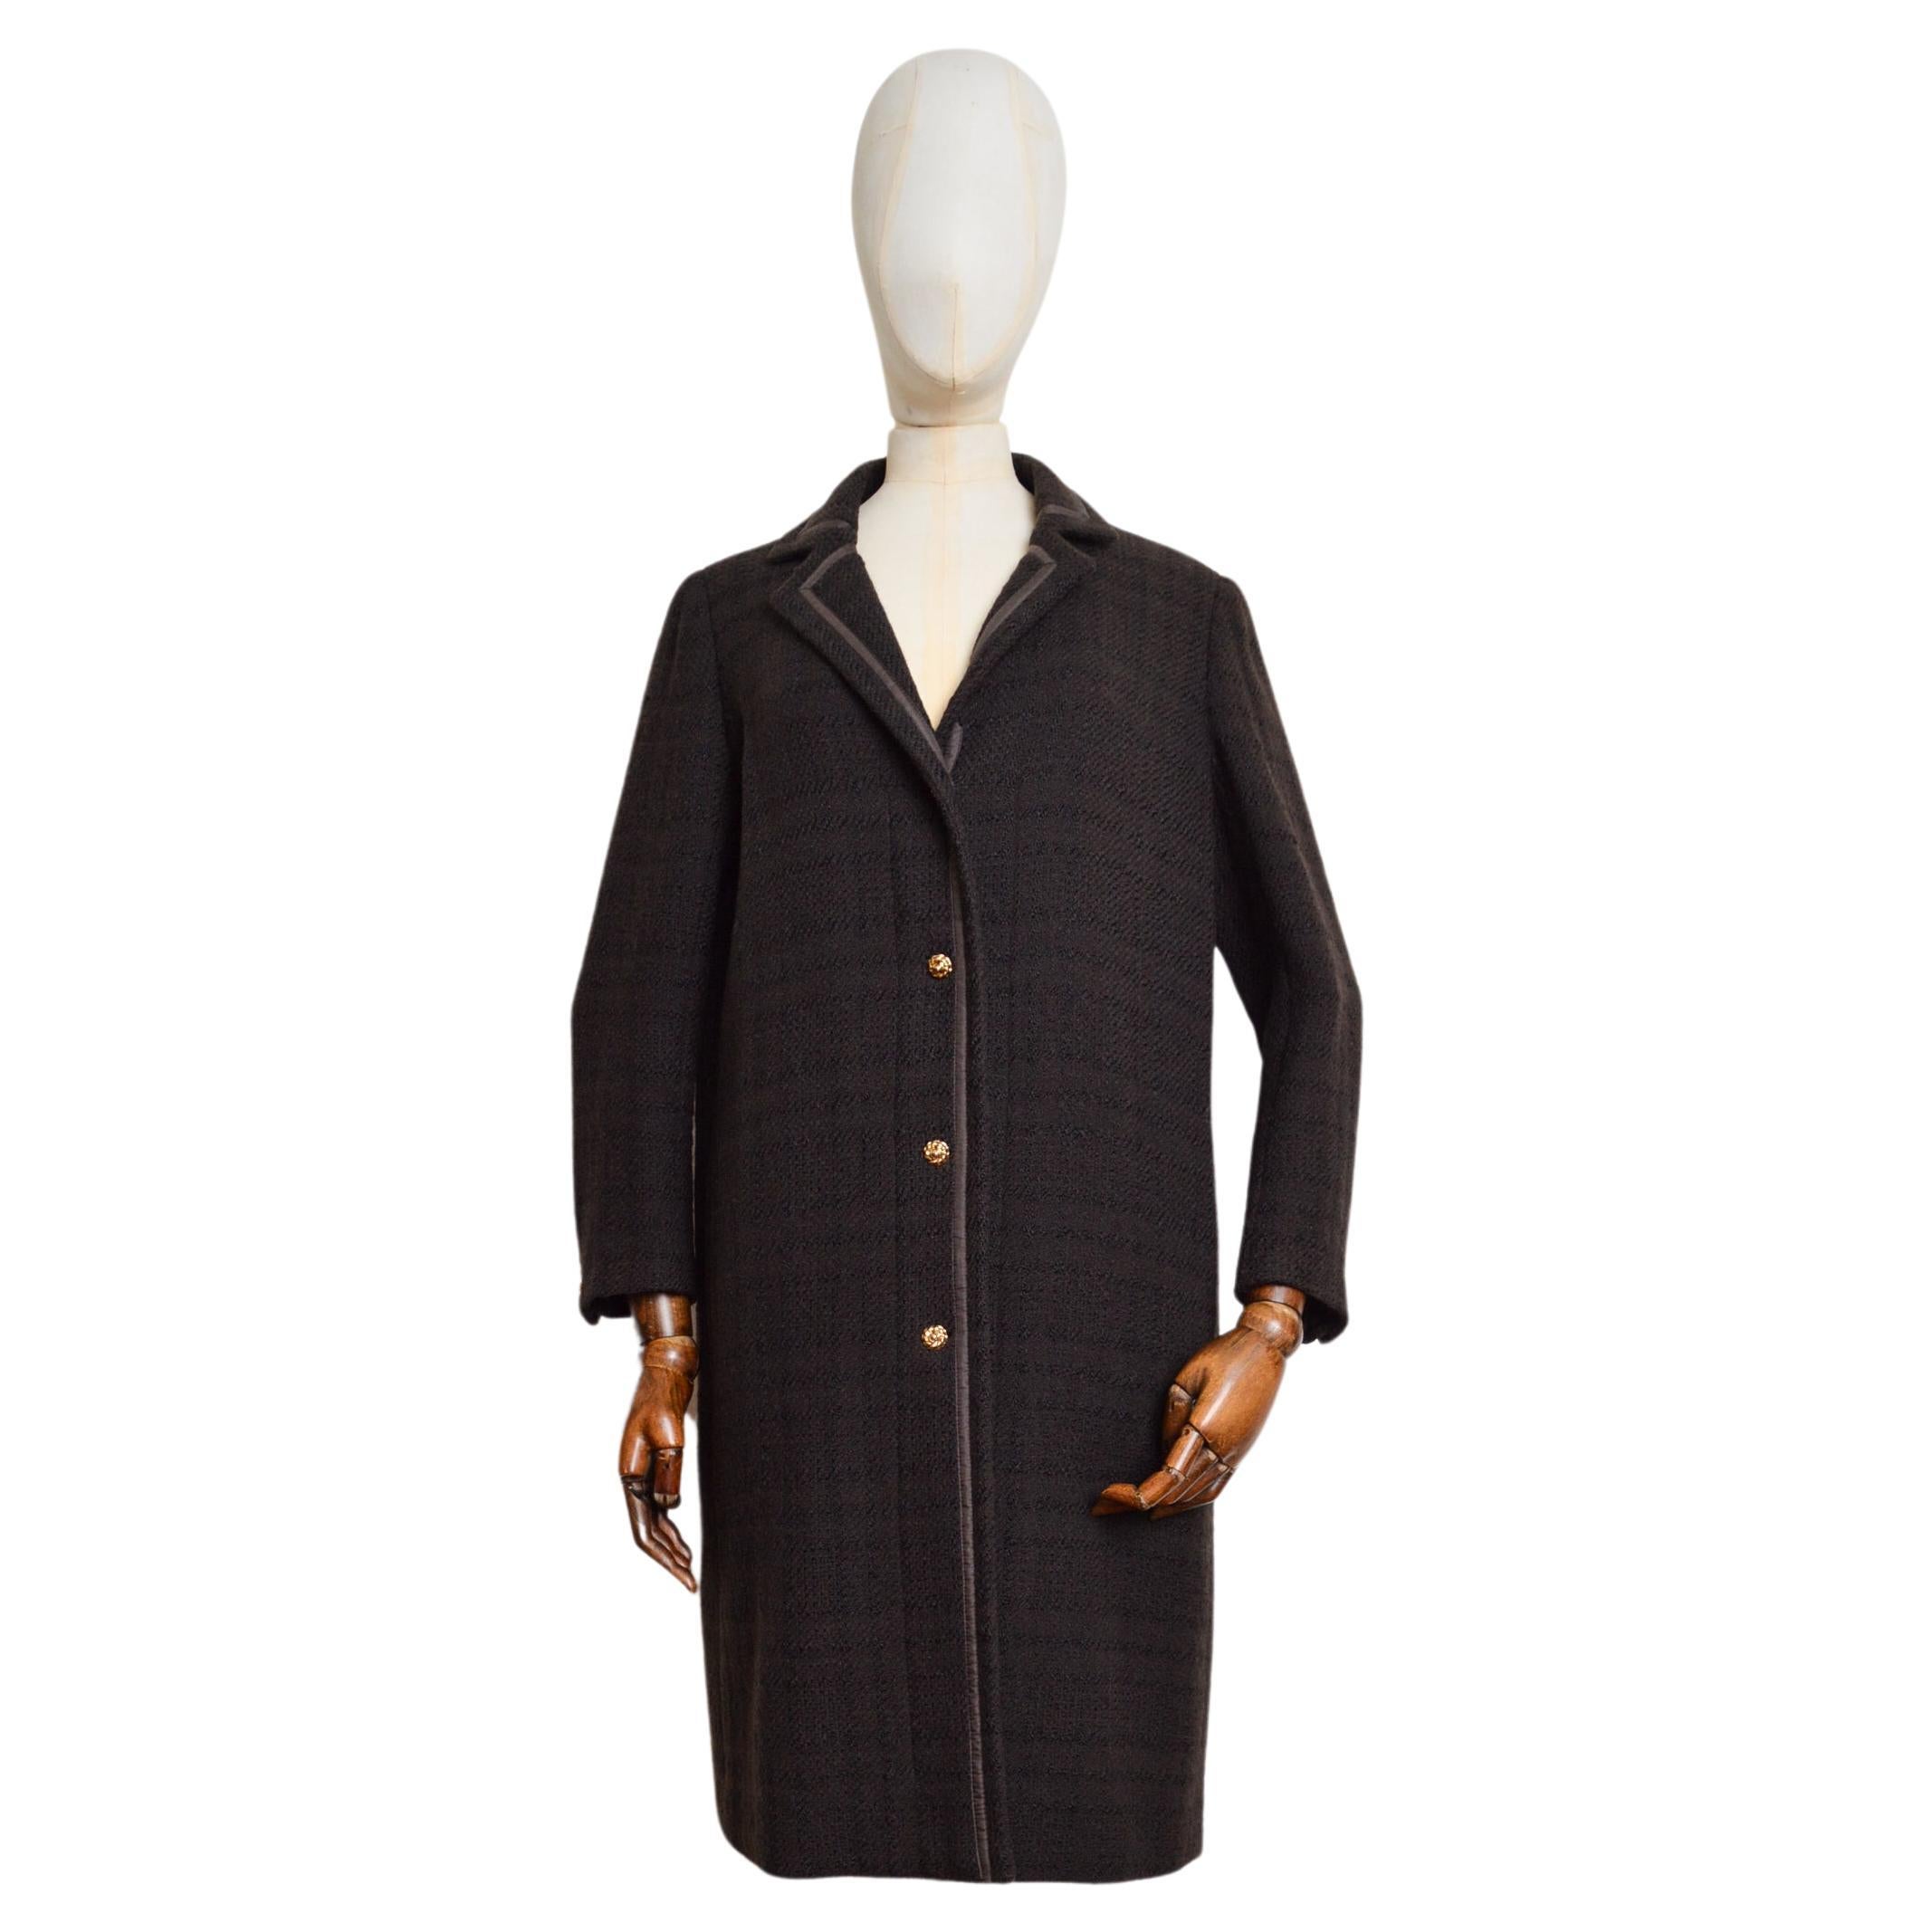 Chanel Long Coat - 46 For Sale on 1stDibs